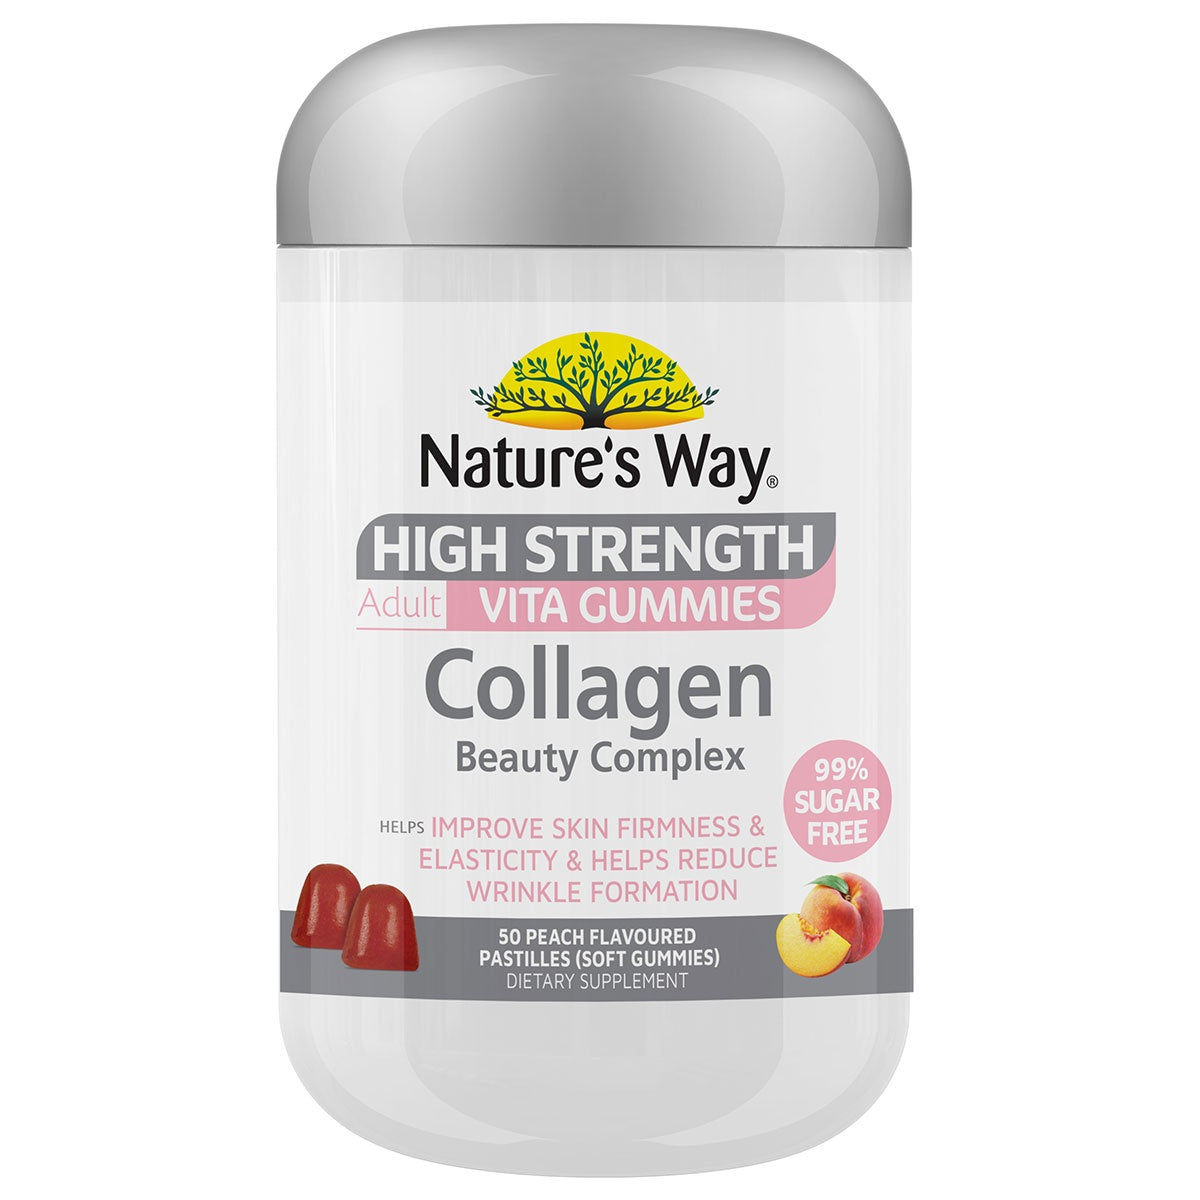 Nature's Way High Strength Adult Vita Gummies Collagen Beauty Complex 50 Pastilles